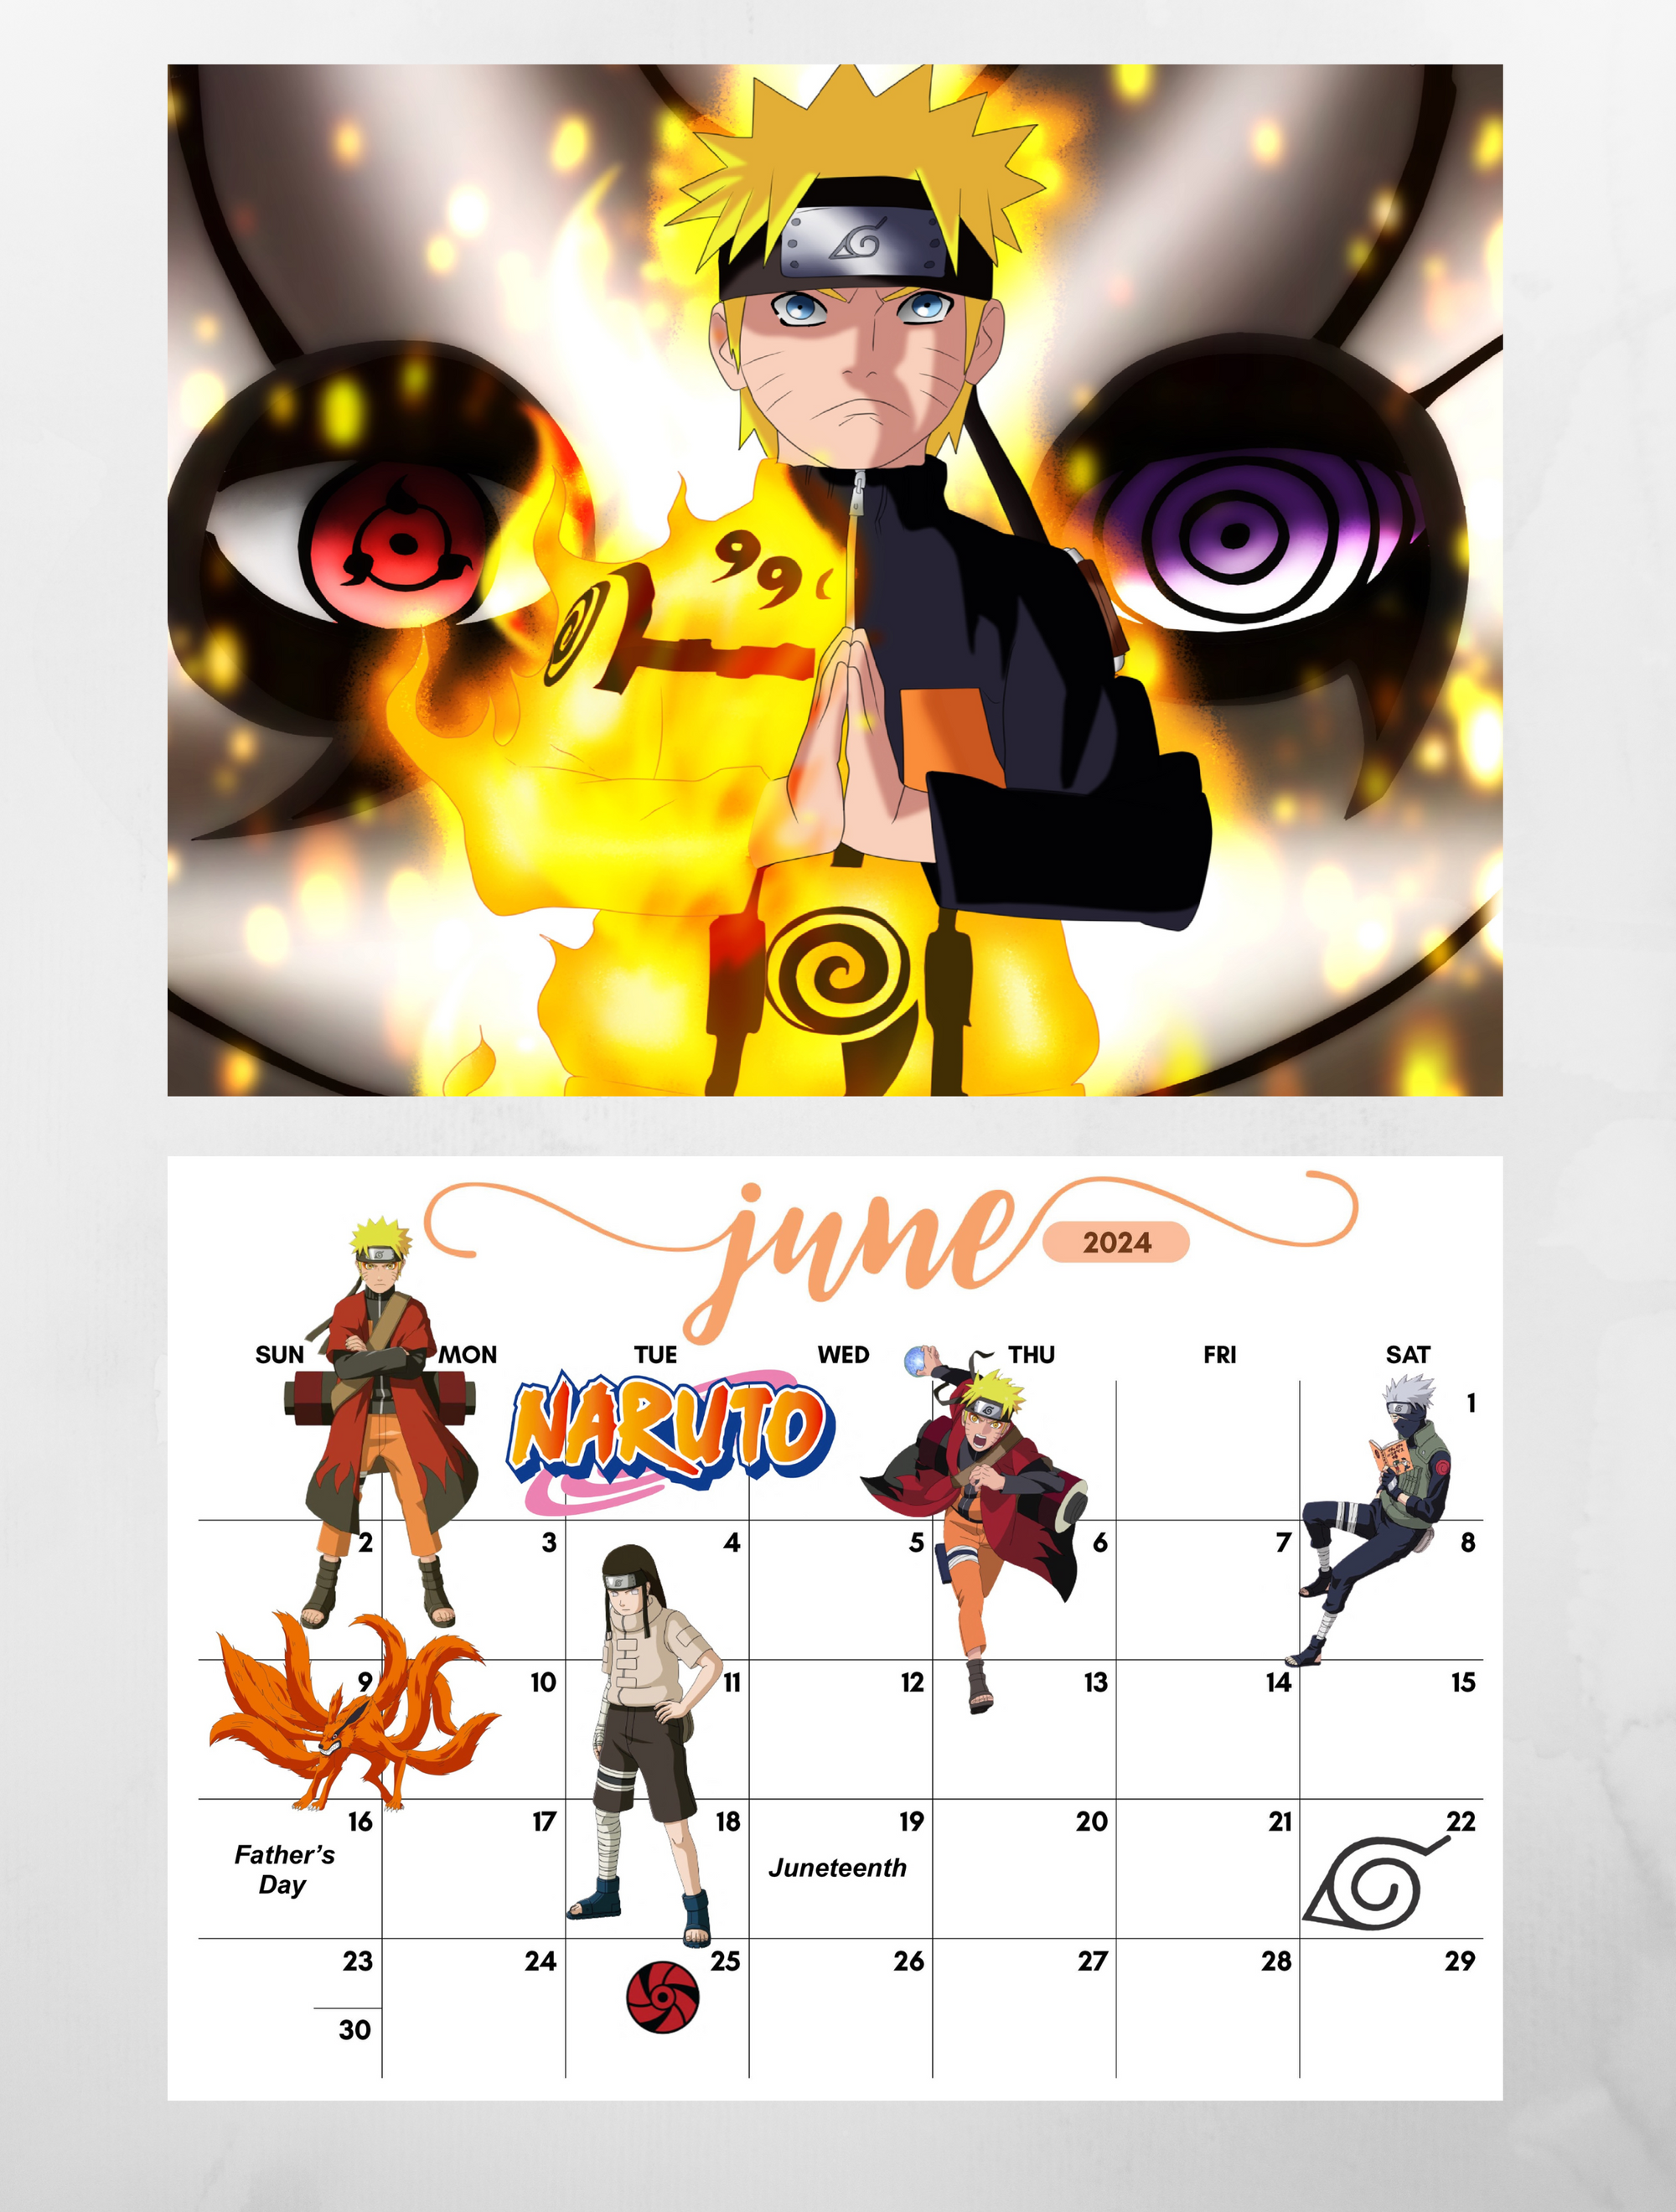 DateWorks 2024 Naruto Shippuden Wall Calendar